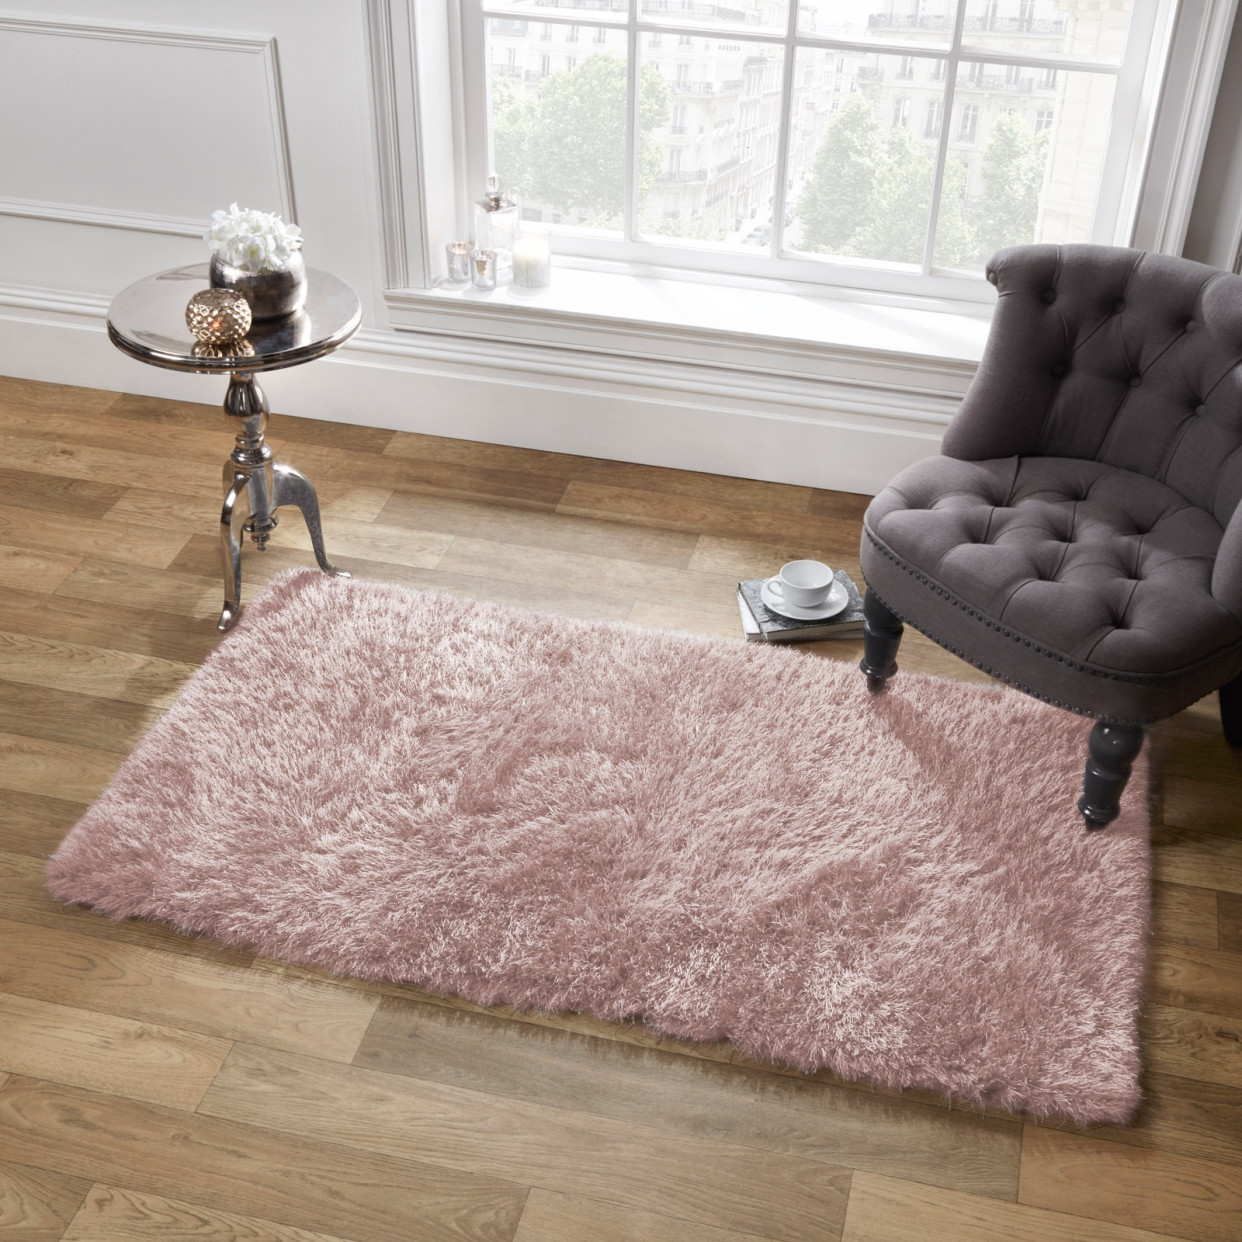 Sienna Large Shaggy Soft Floor Rug 5cm Pile, Blush Pink - 160 x 230cm>